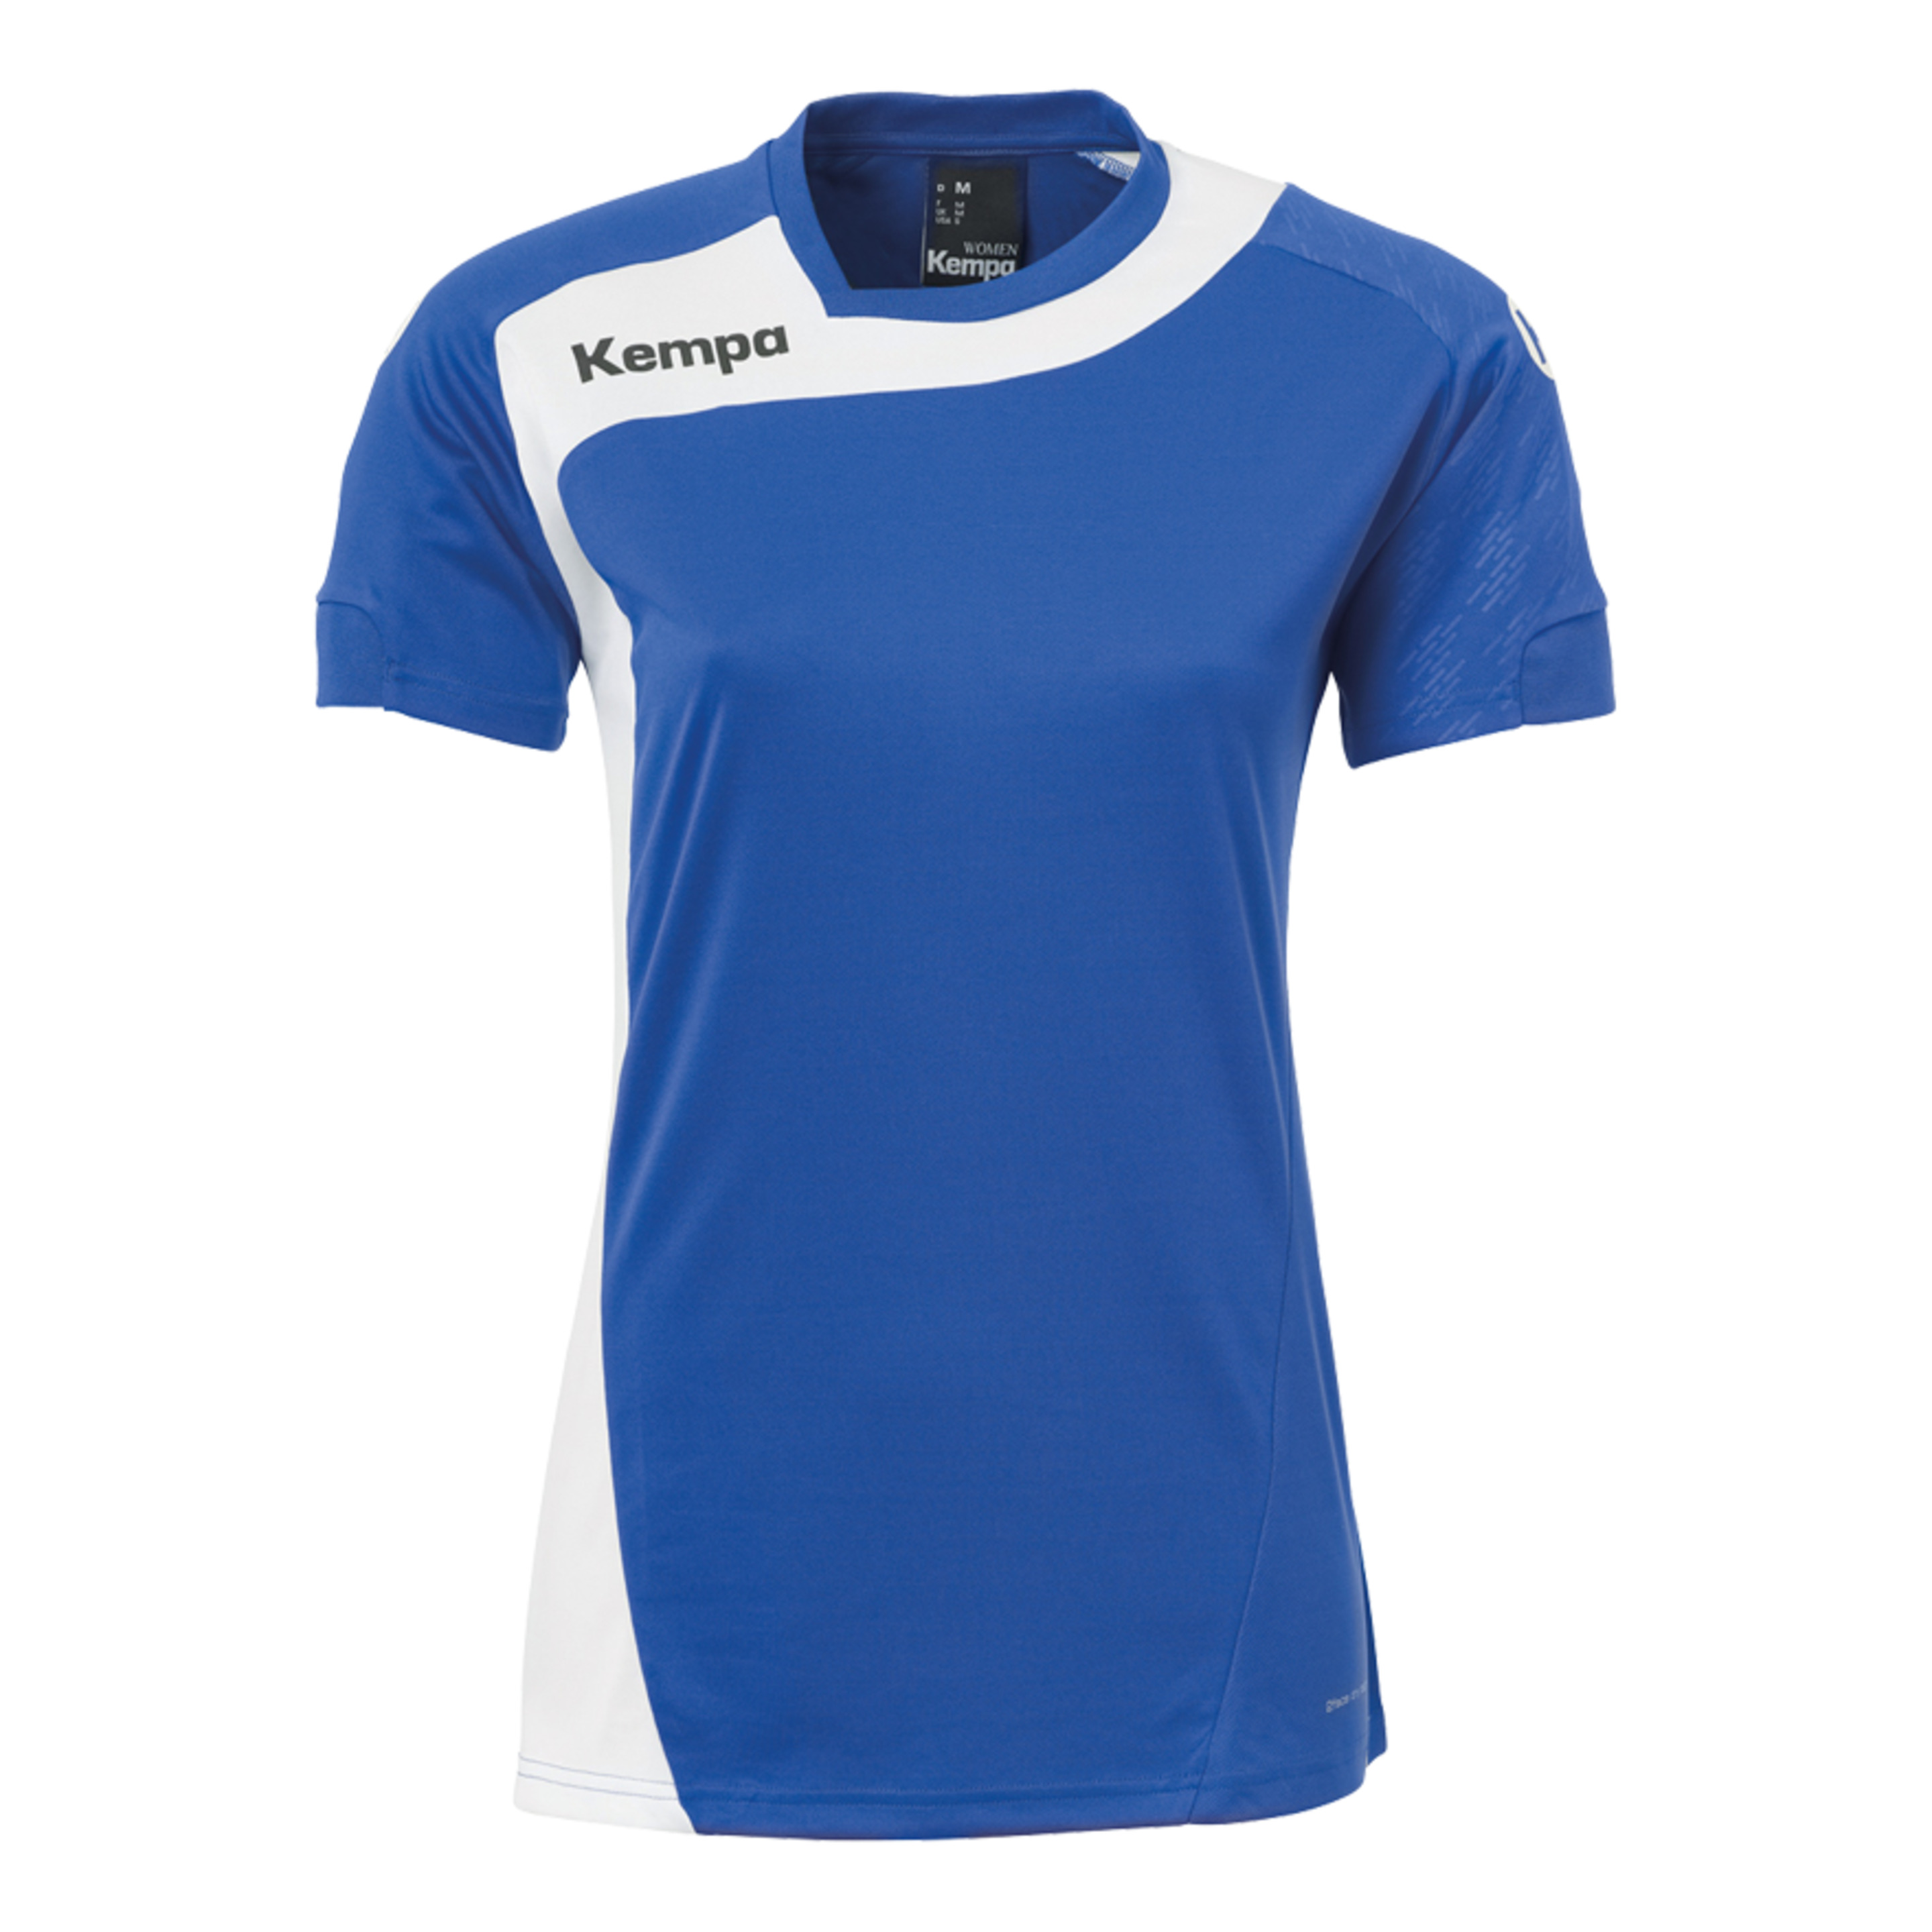 Peak Camiseta De Mujer Azul Royal/blanco Kempa